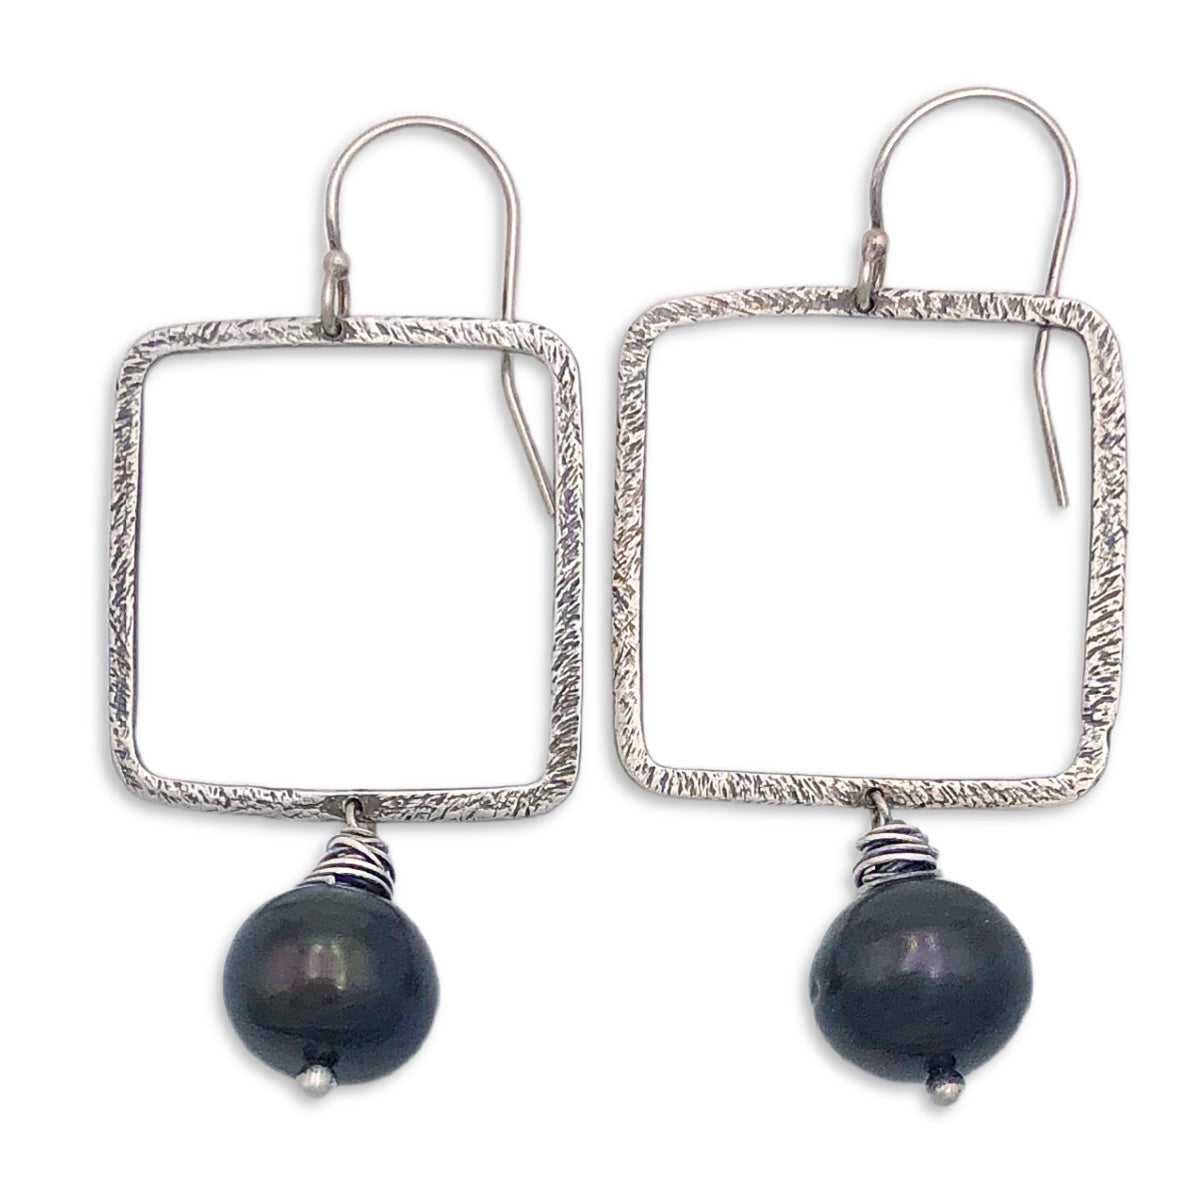 Hammered Square Black Pearl Earrings